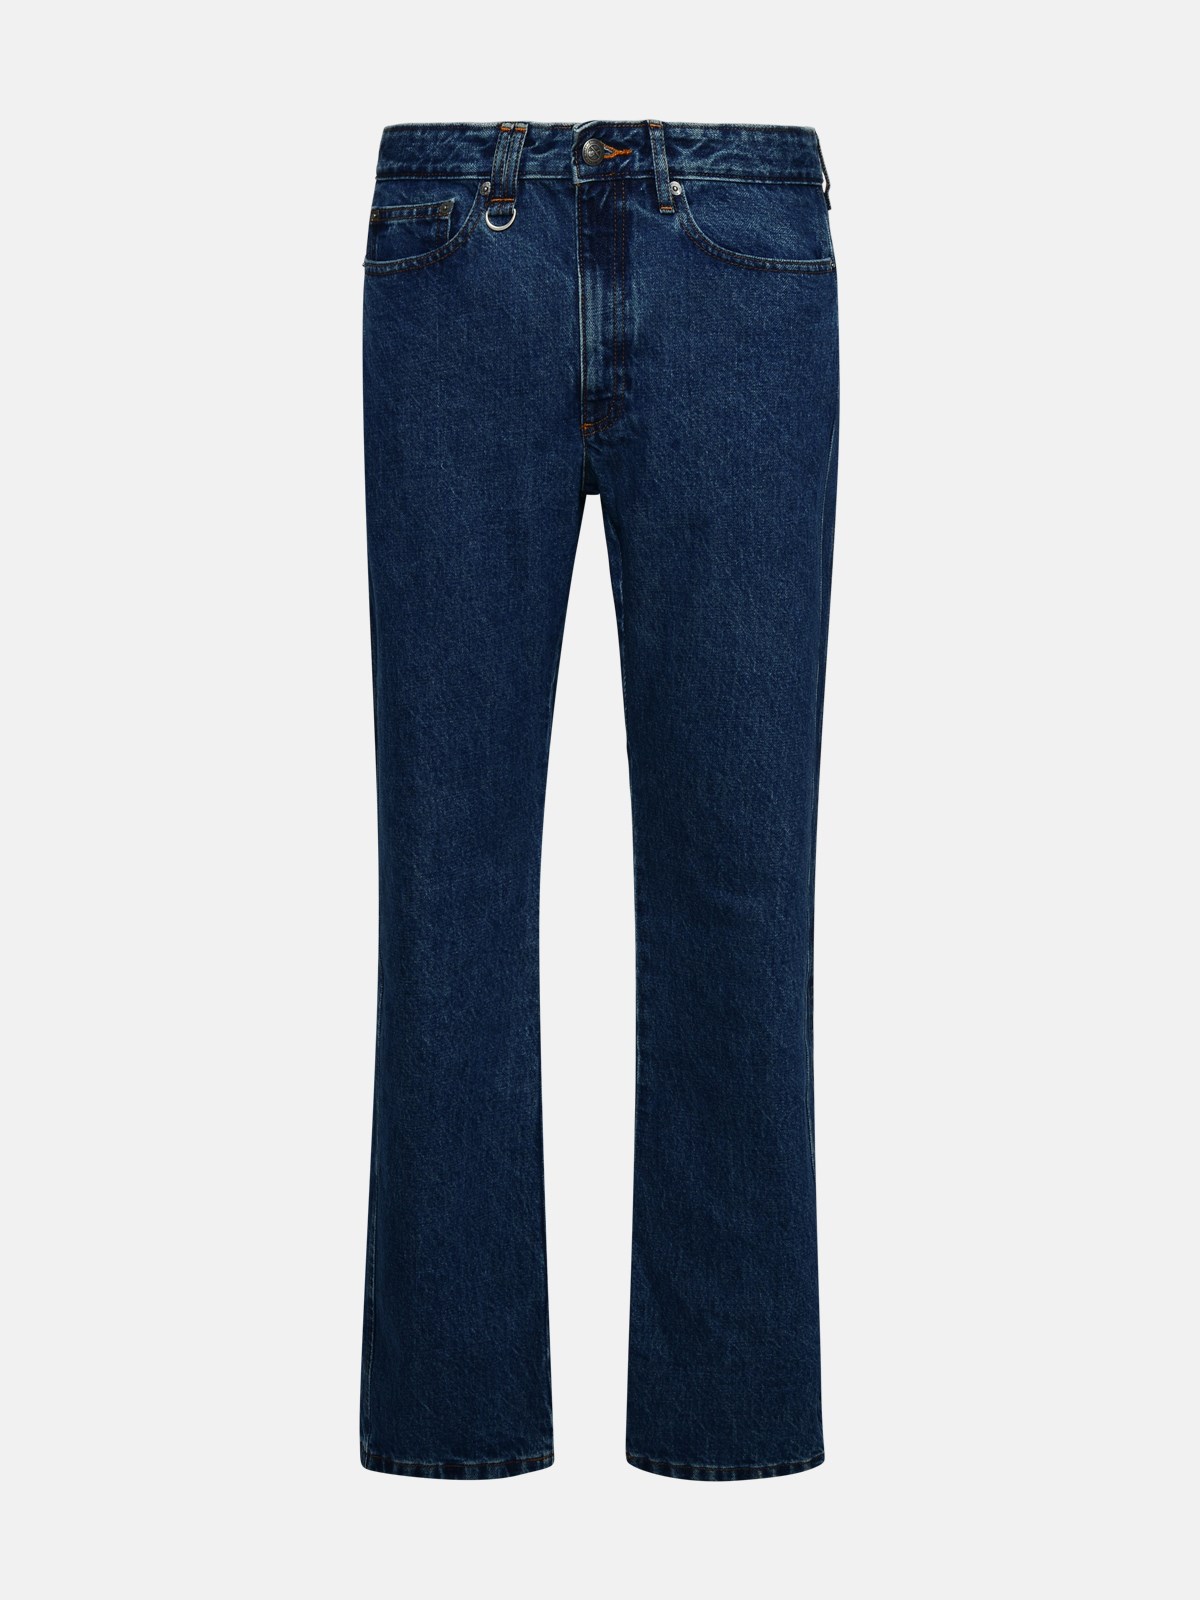 Apc Ayrton Blue Denim Jeans